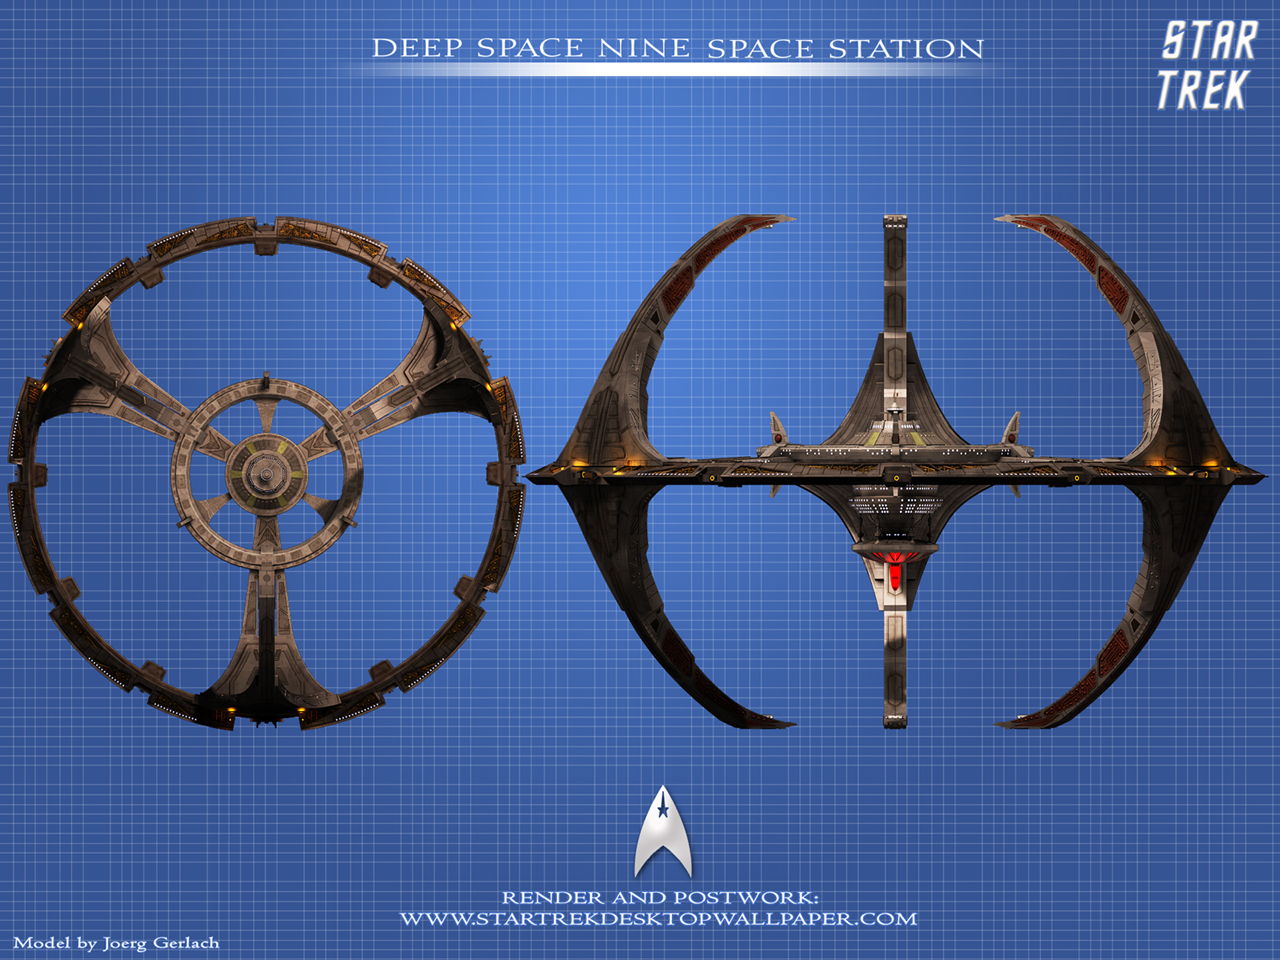 - Star Trek Deep Space Nine Space Station - free Star Trek computer desktop wallpaper, pictures, images.